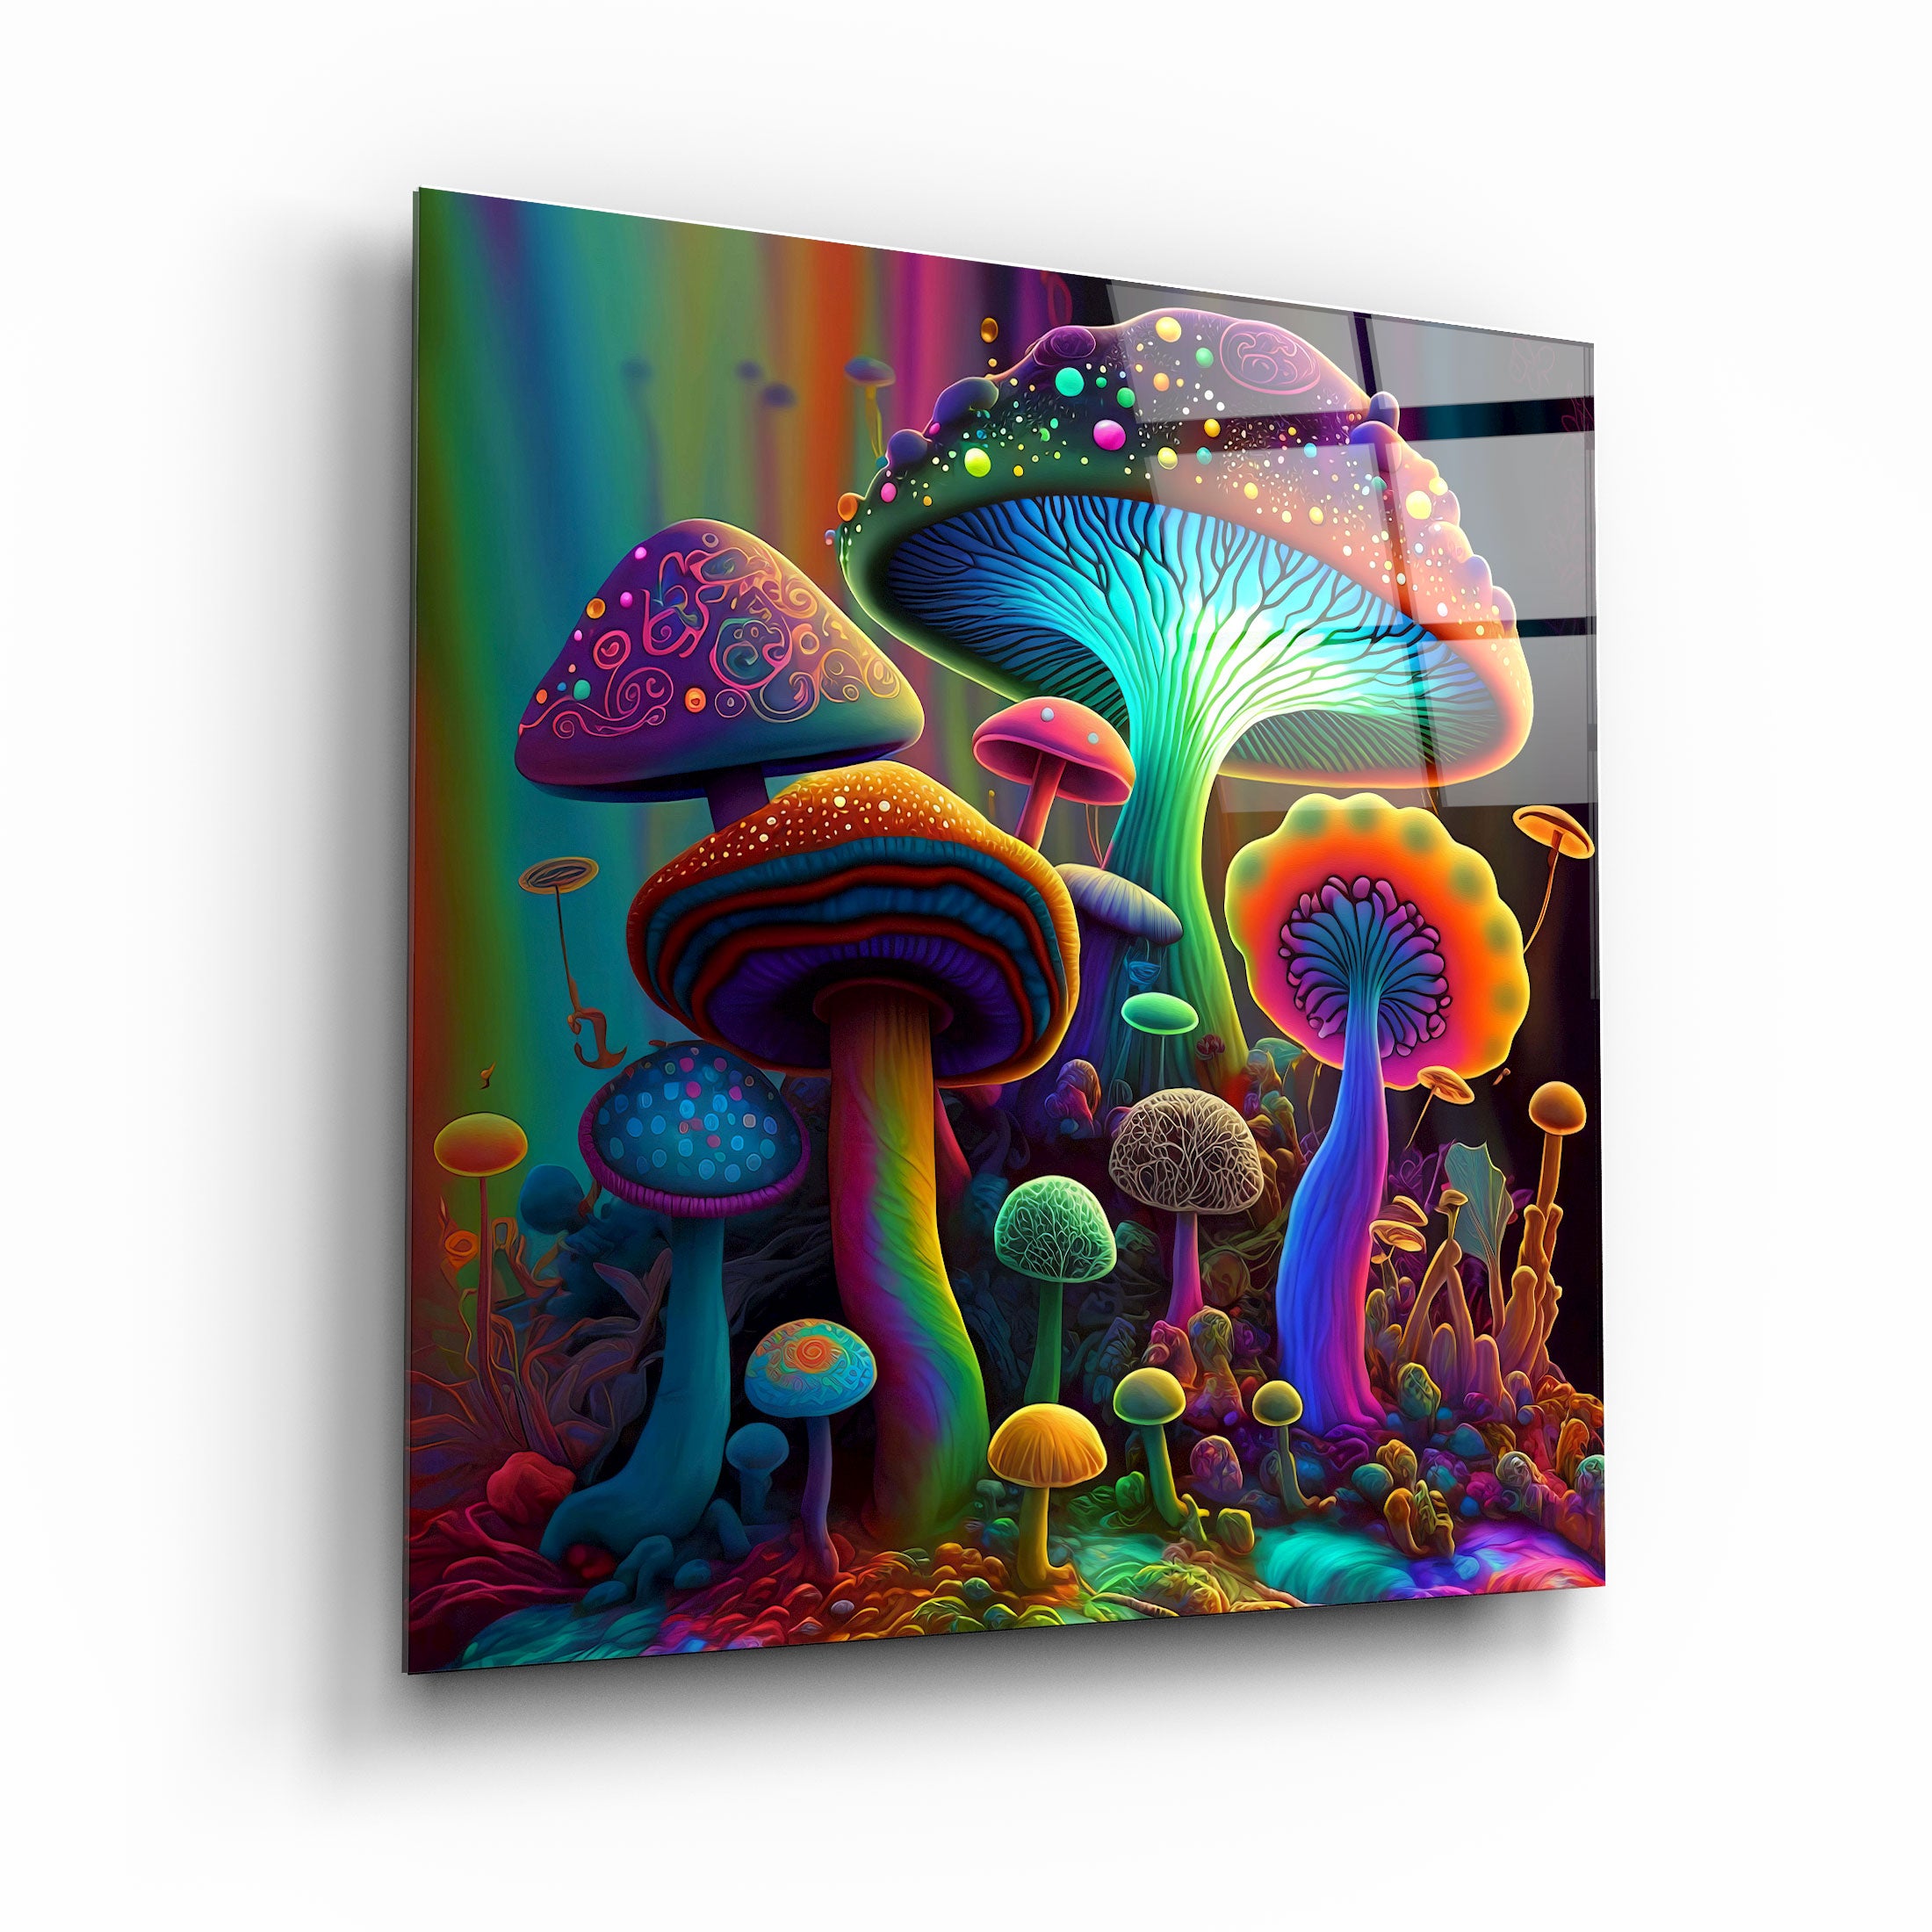 .."Fungies Néon V2". Art mural en verre de la collection du designer